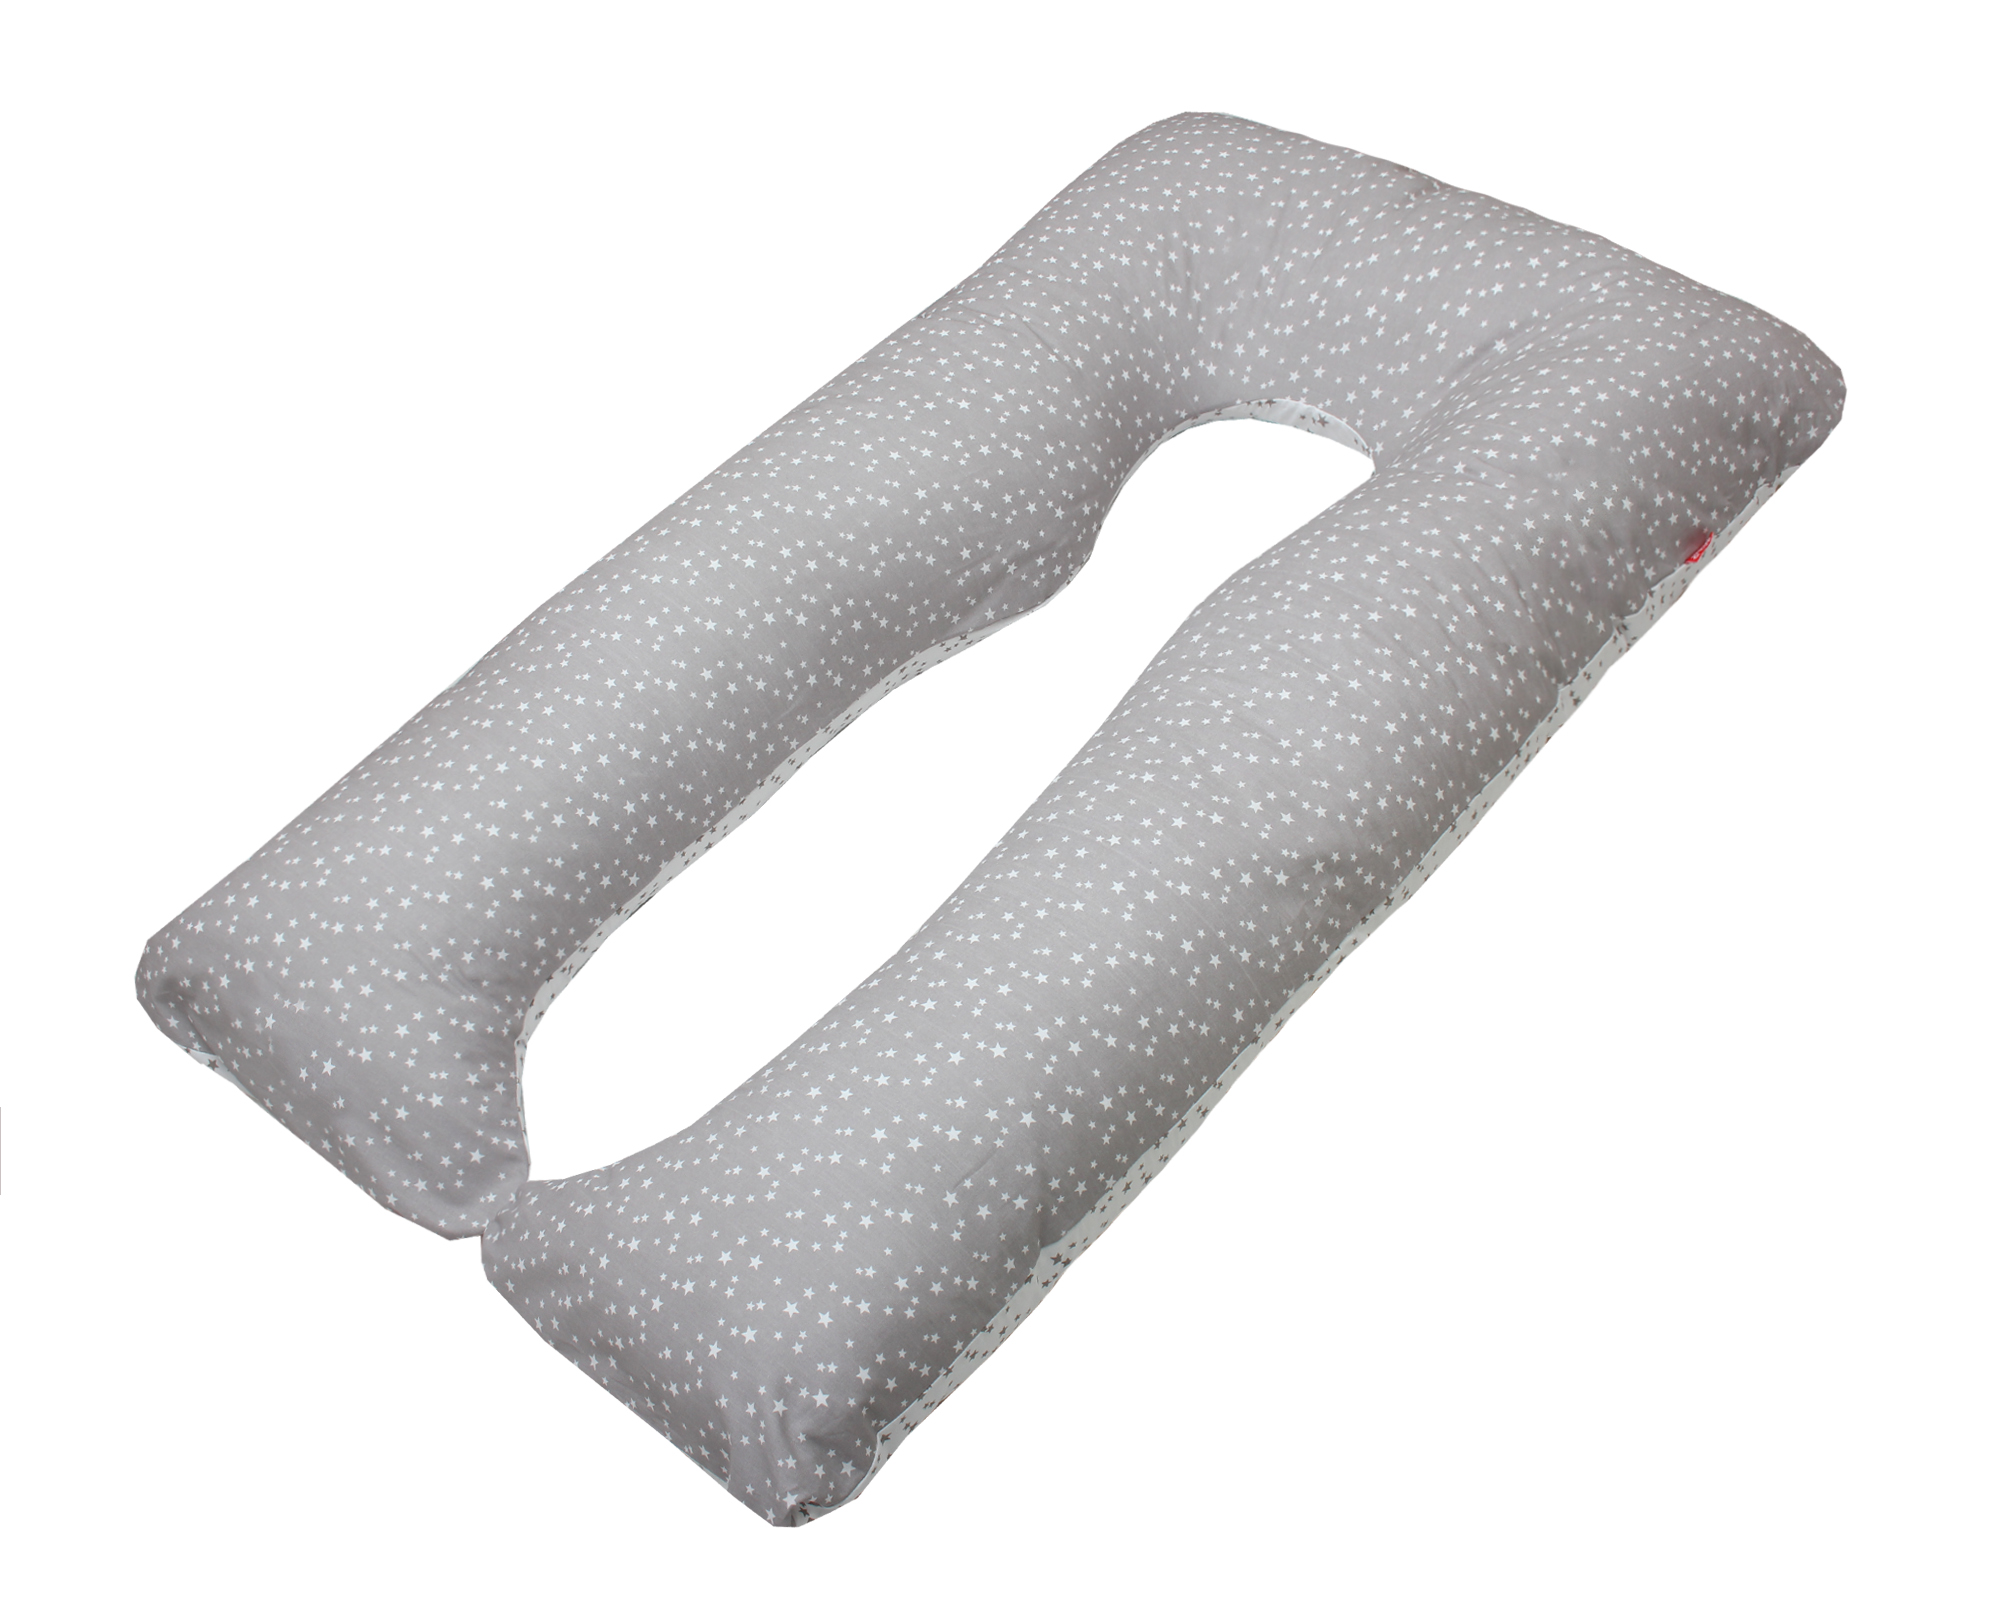 Scamp ölelő párna - homokóra alakú /GreyWhiteLittleBigStars